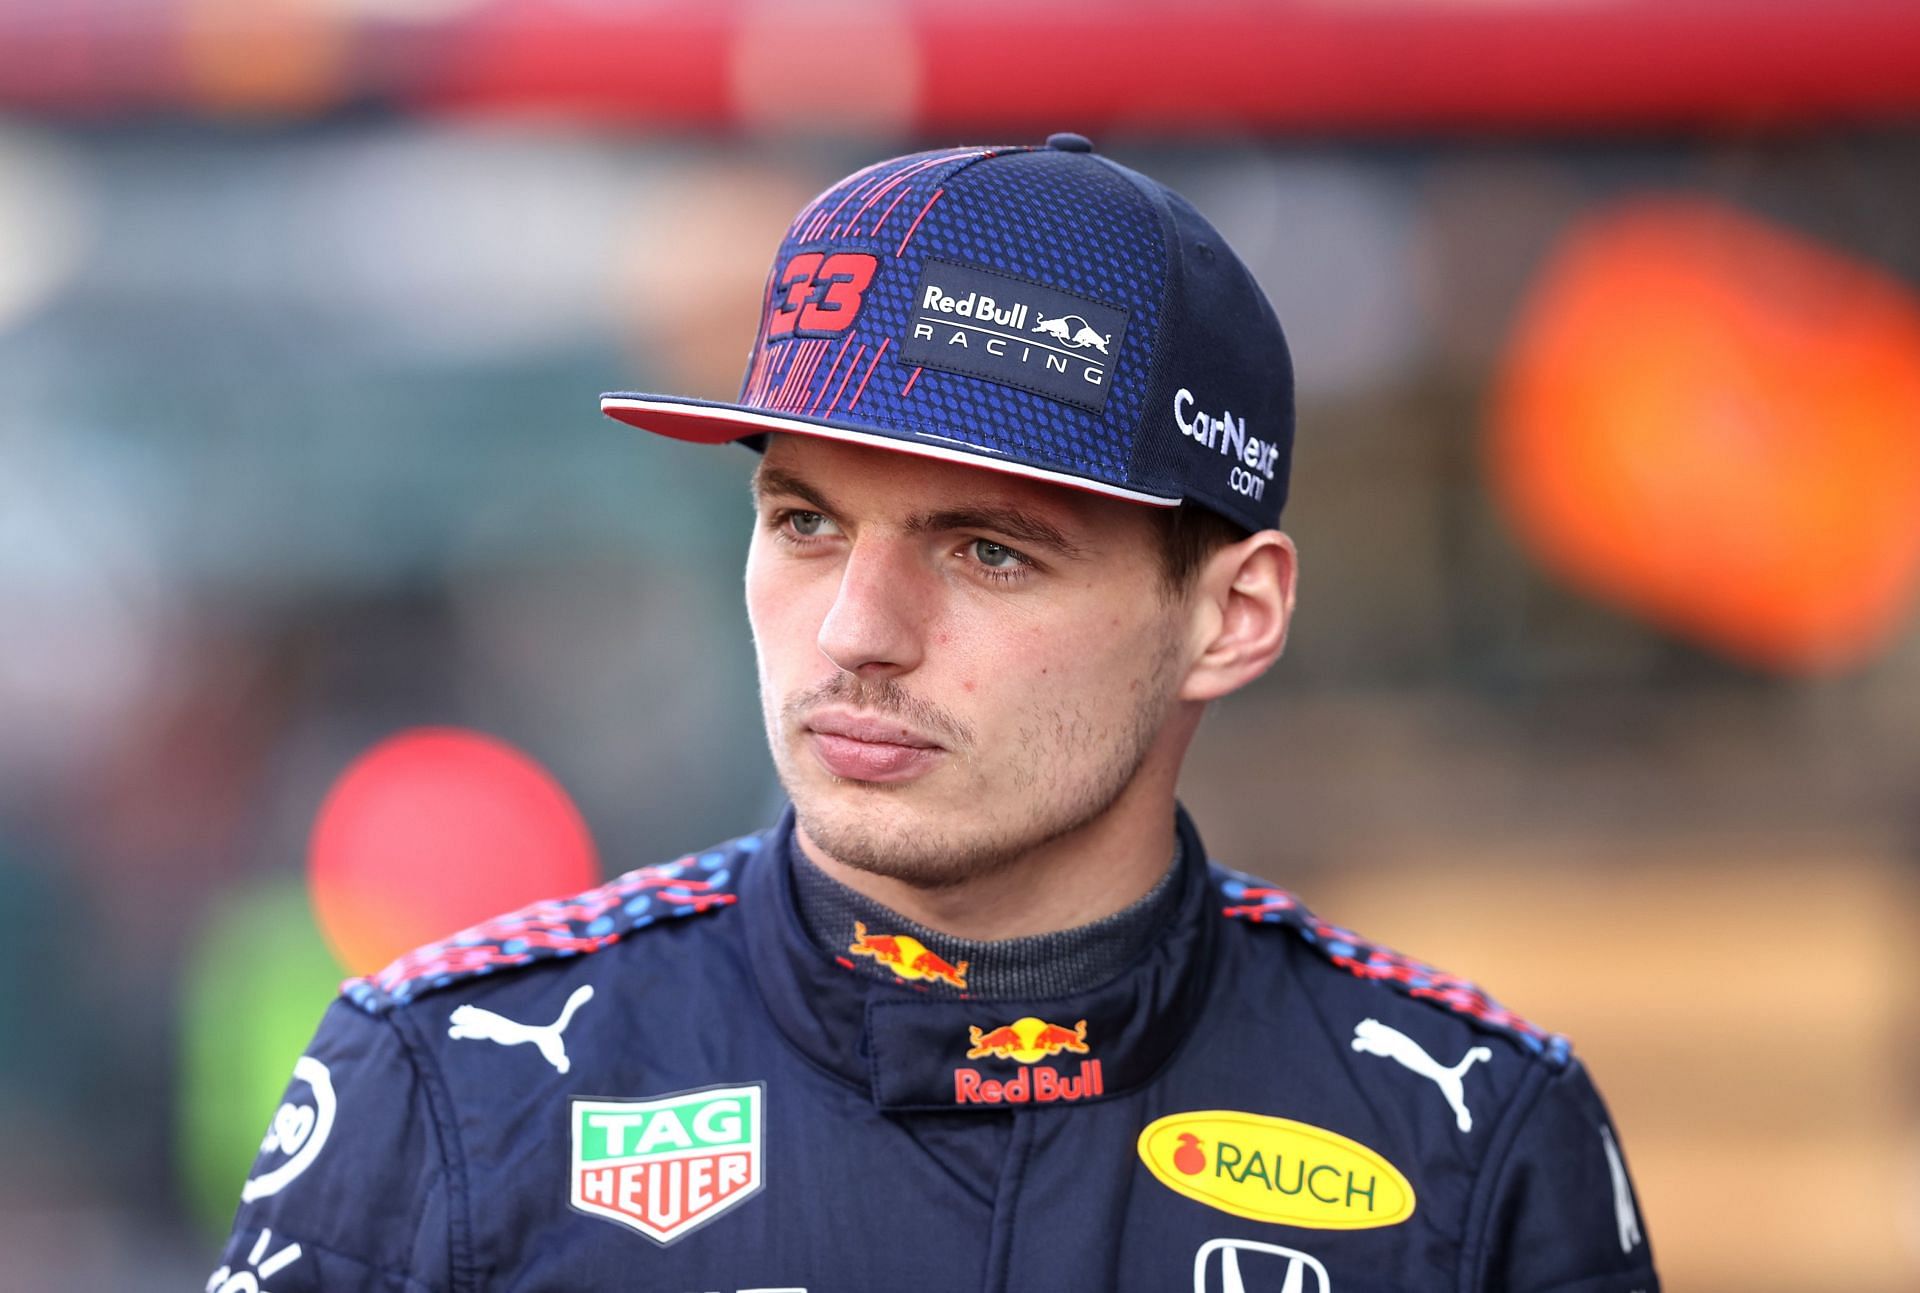 F1 News: Max Verstappen's form doubted by Jacques Villeneuve